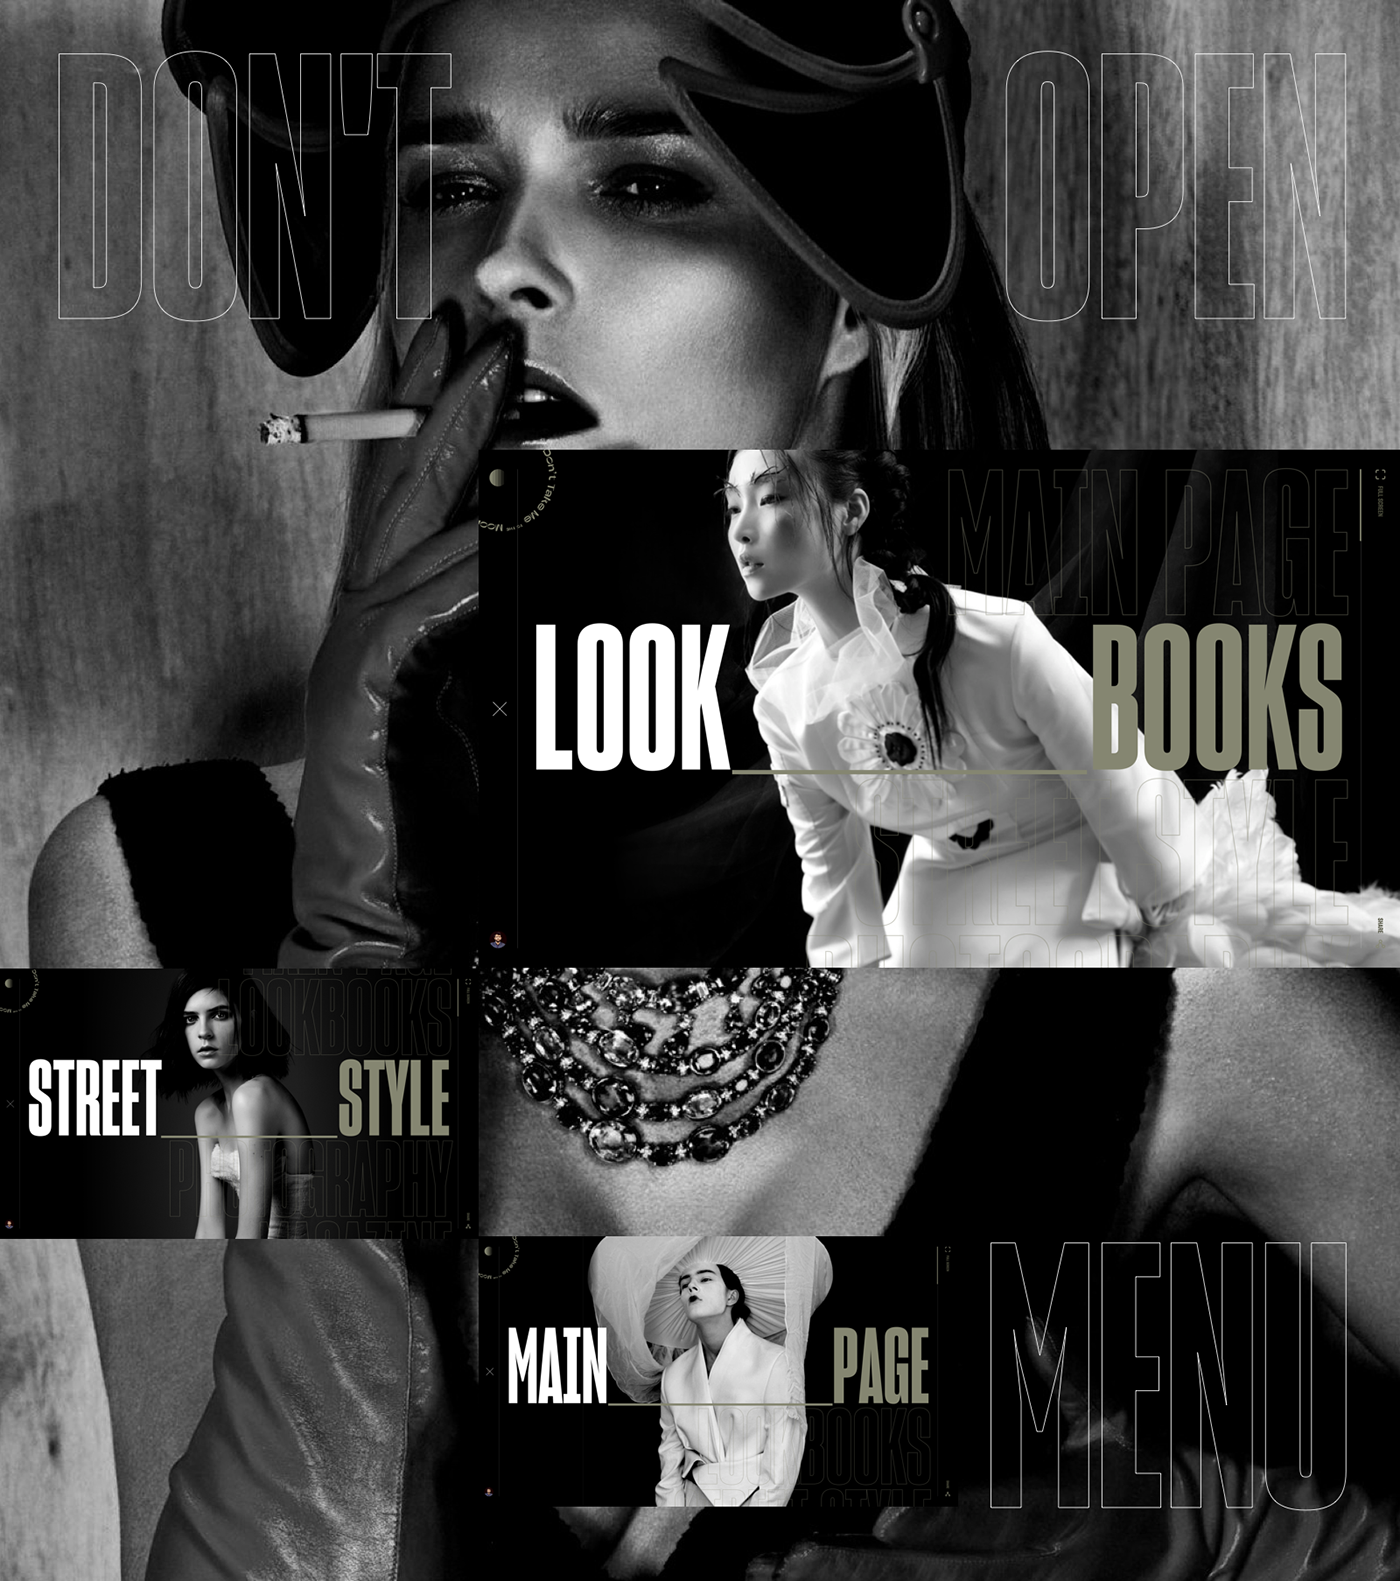 minimal photo Web Interface news book design slide Fashion  UI